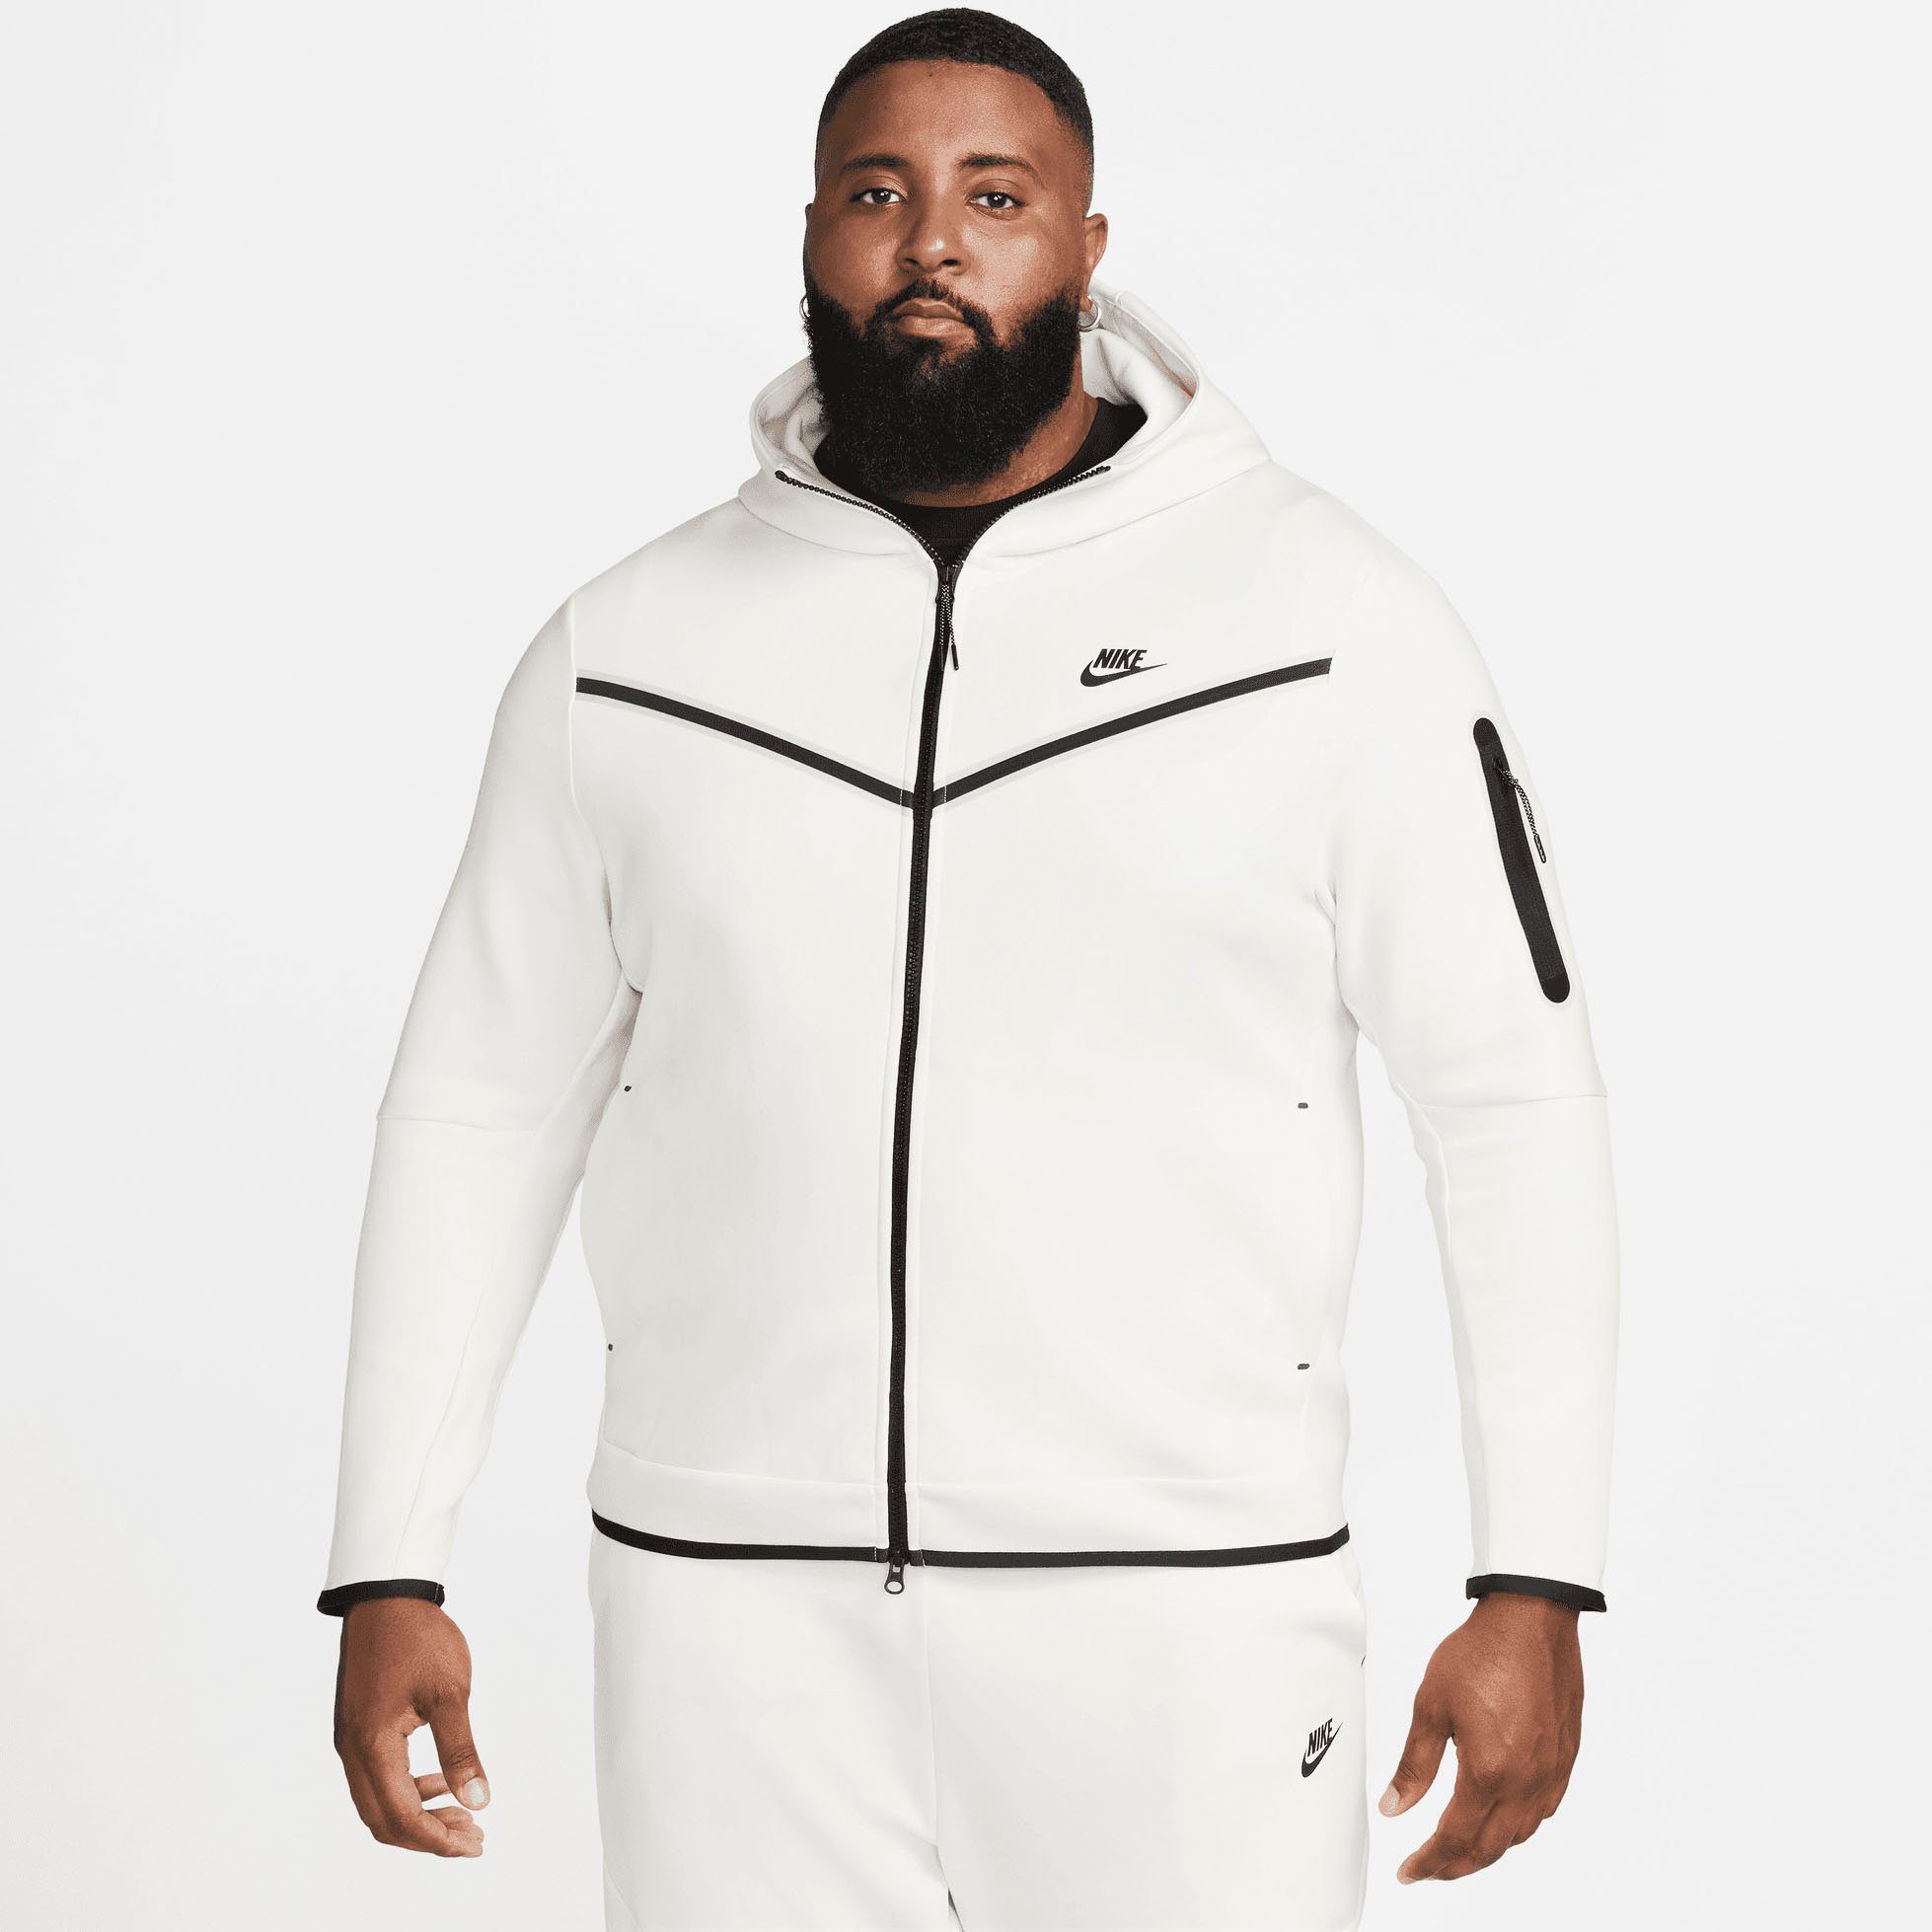 Publiciteit Trottoir resterend Nike Sportswear Vesten heren online kopen | Shop nu | OTTO